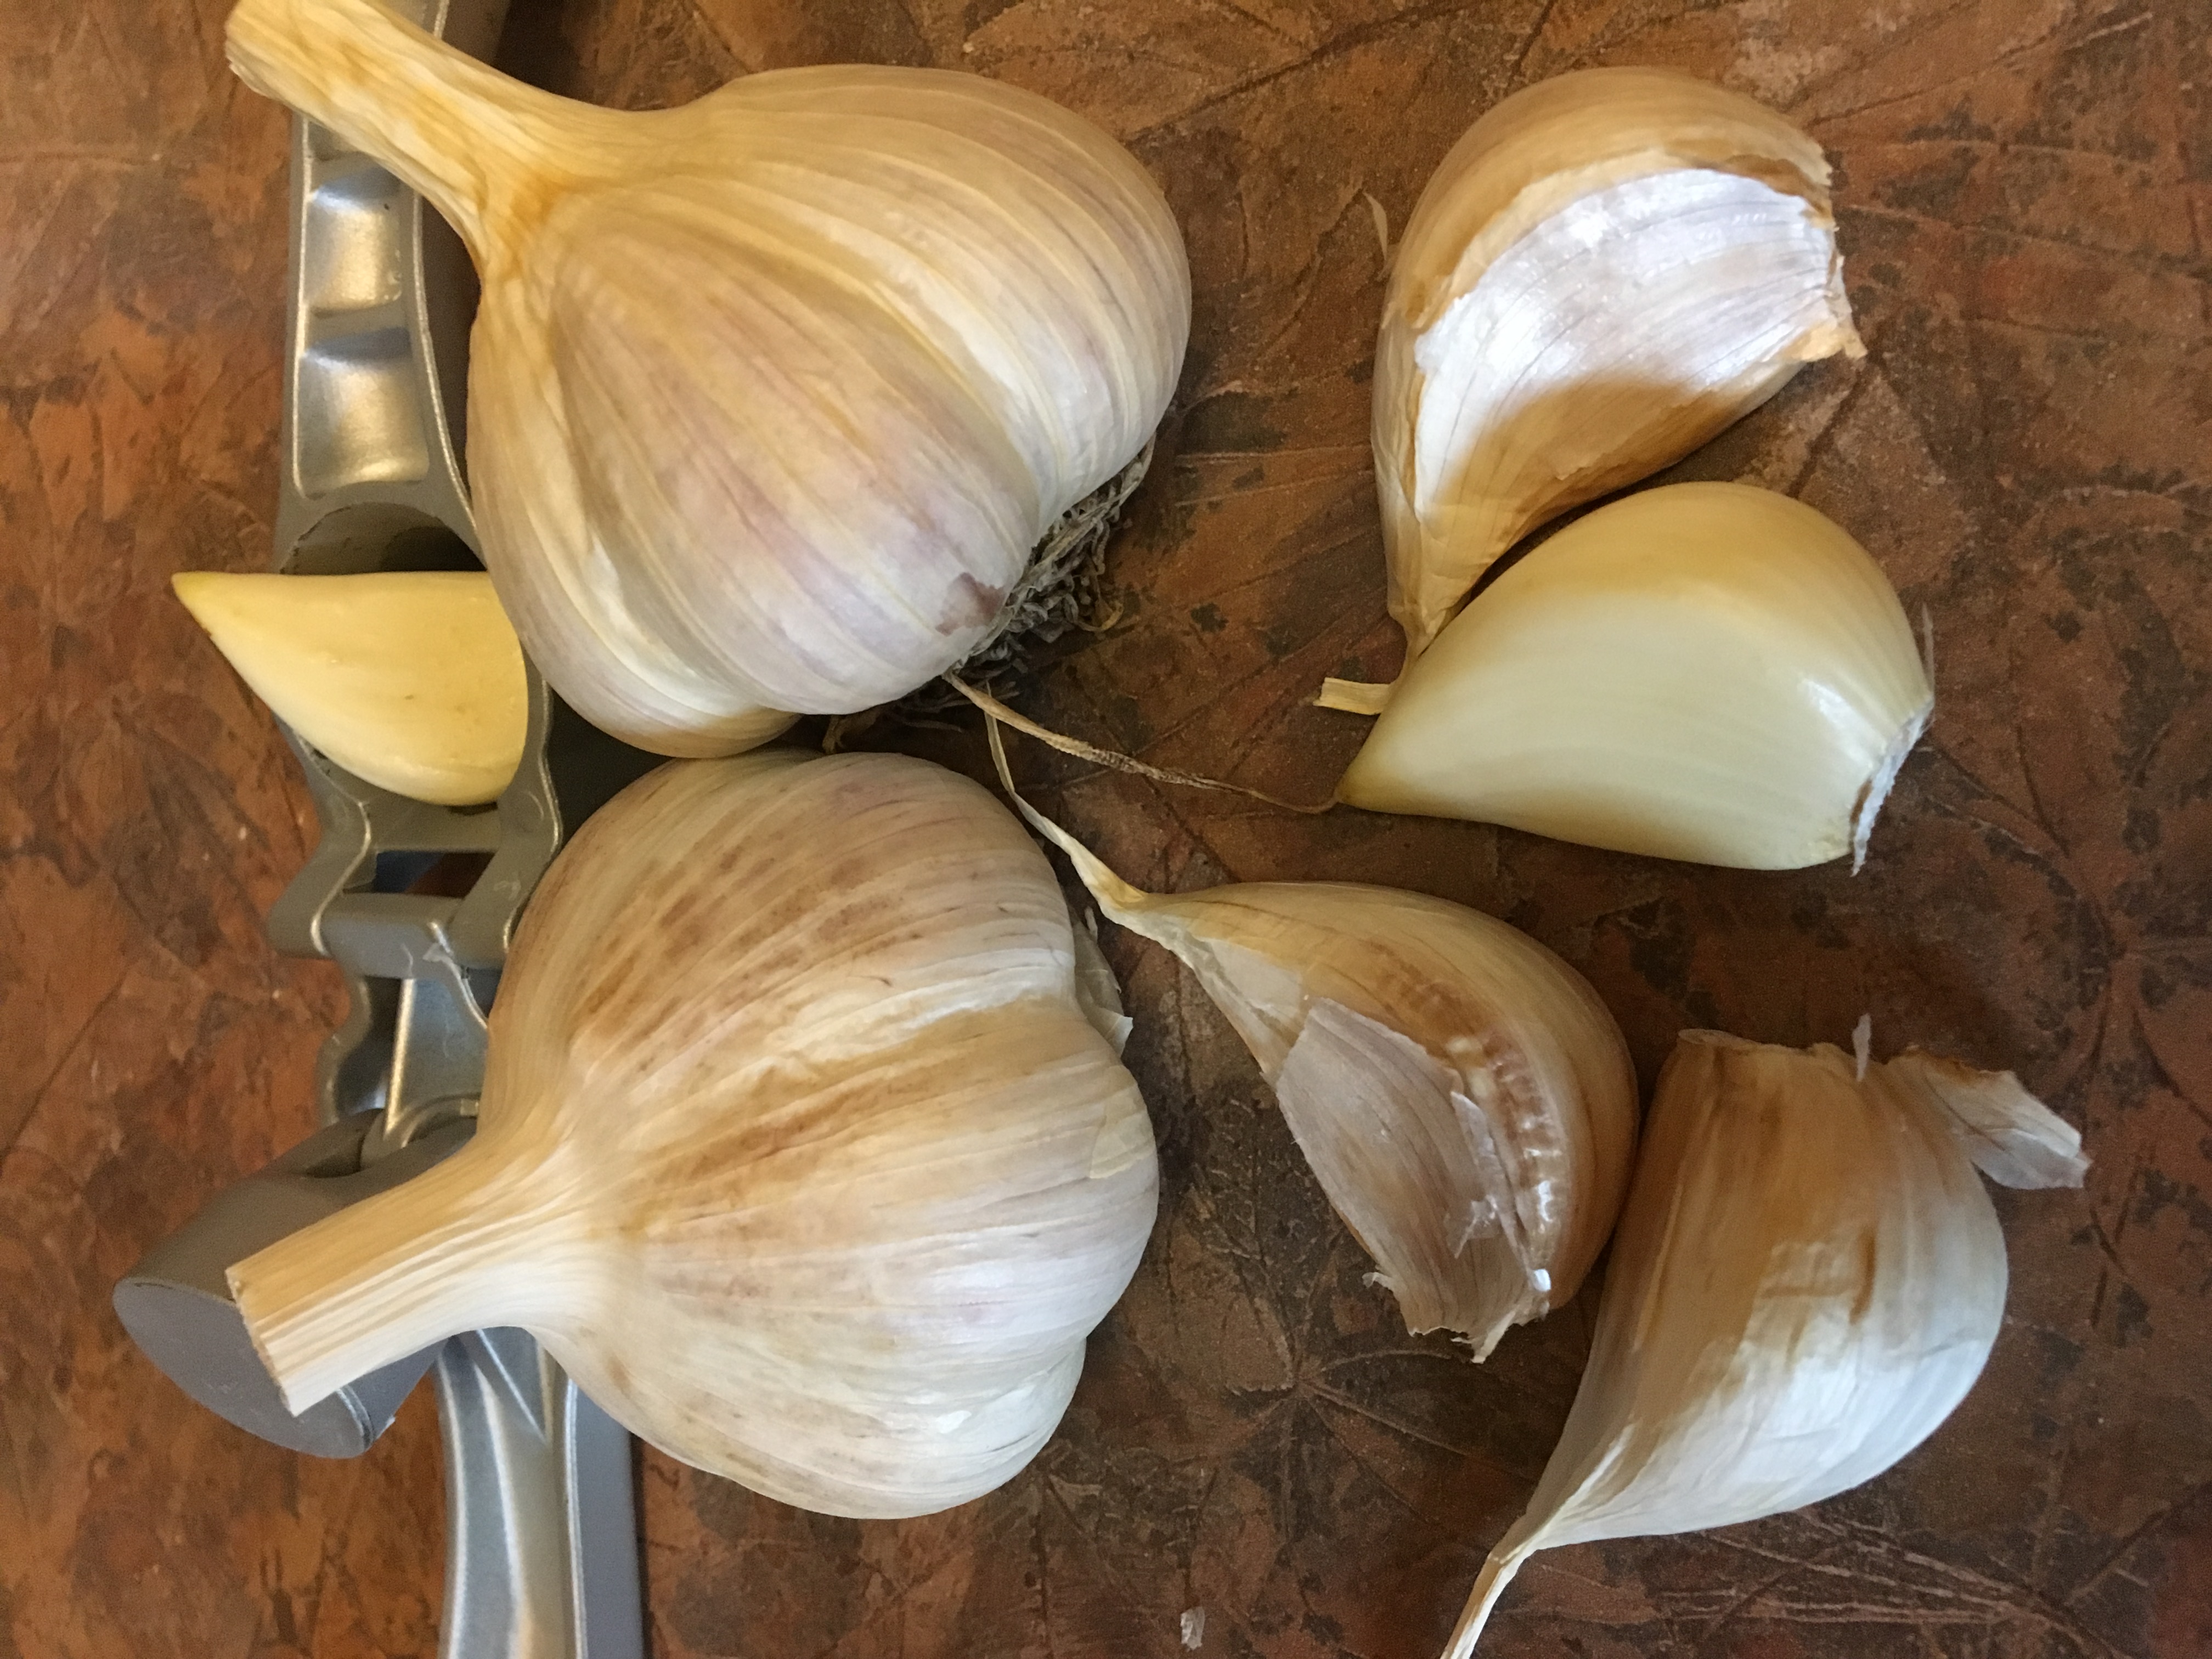 Medicinal garlic